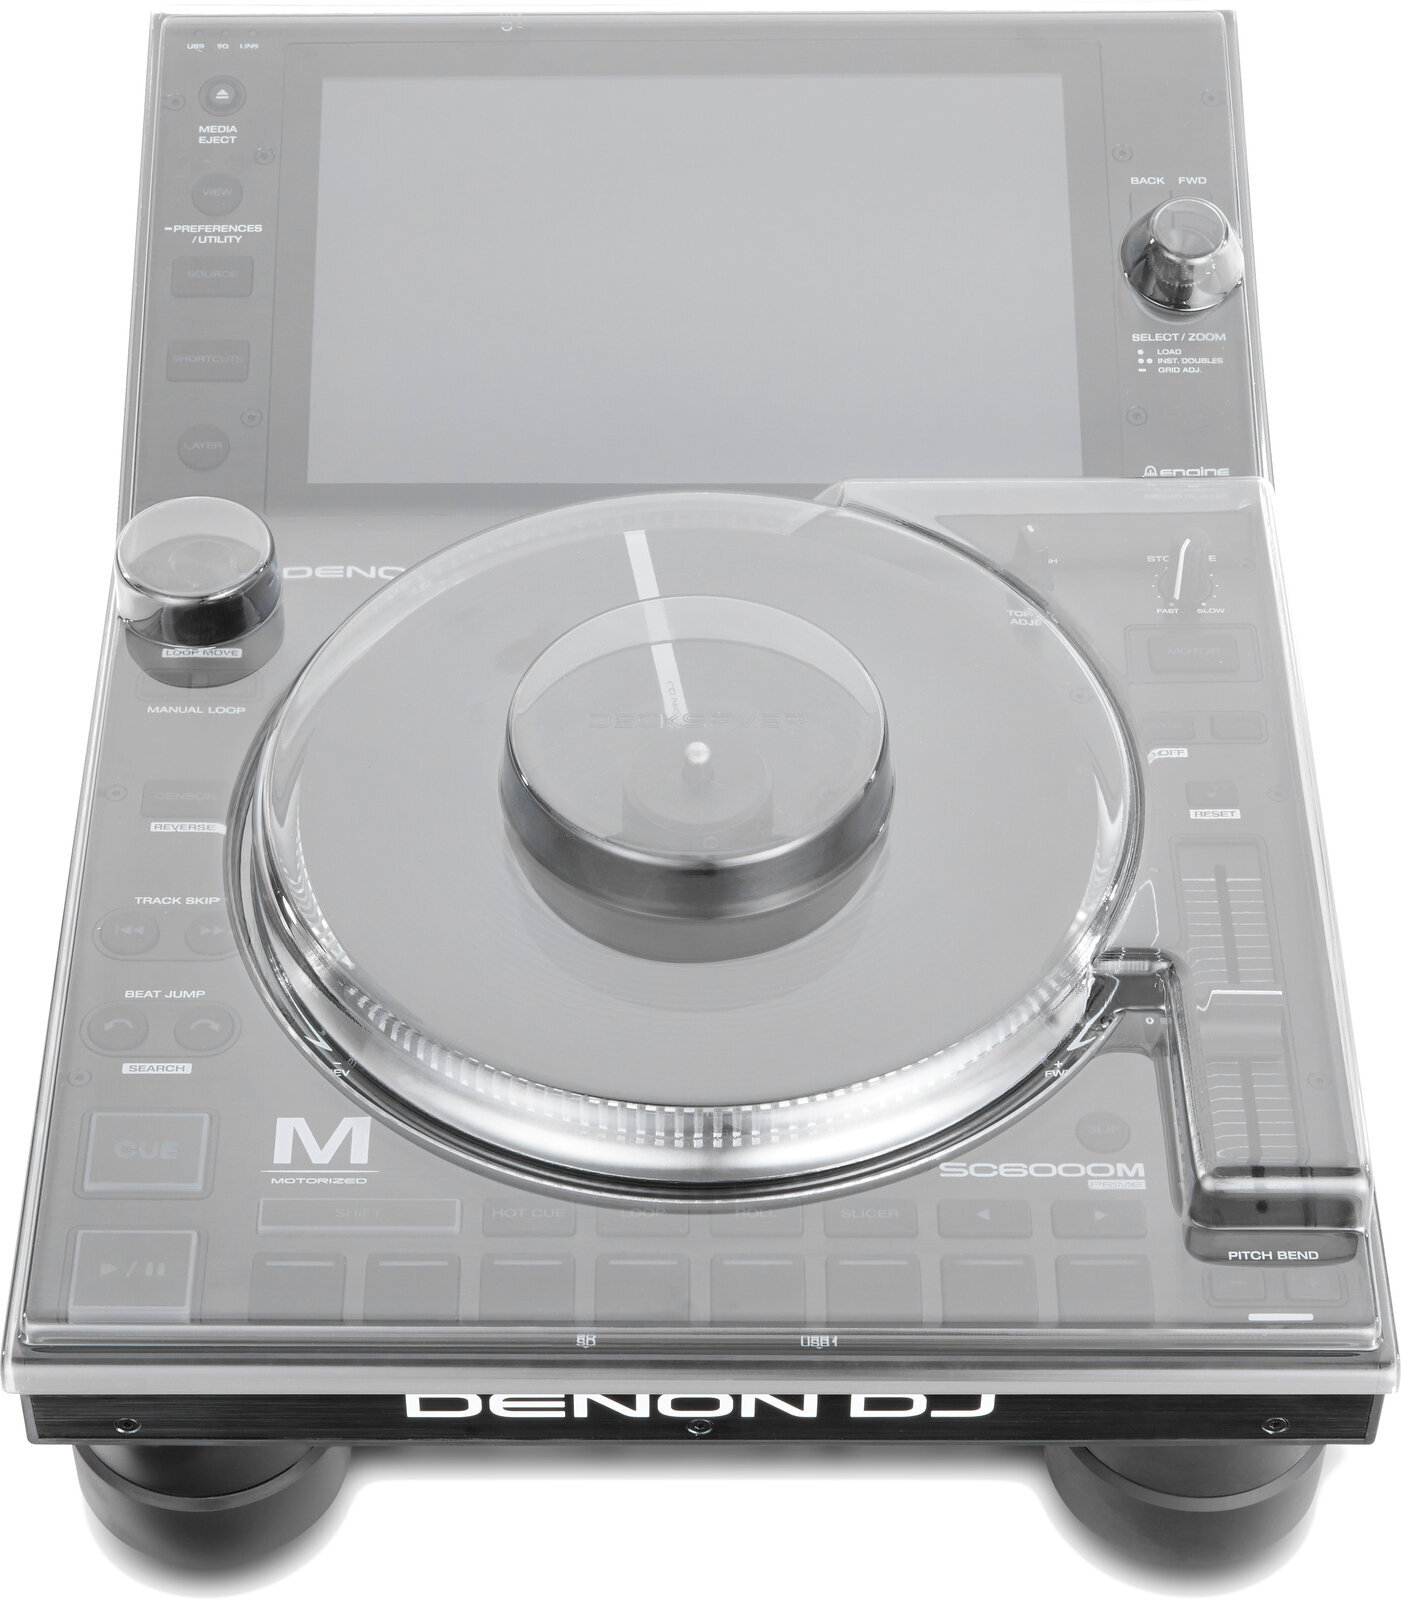 Protective cover for DJ player Decksaver Denon DJ Prime SC6000/SC6000M